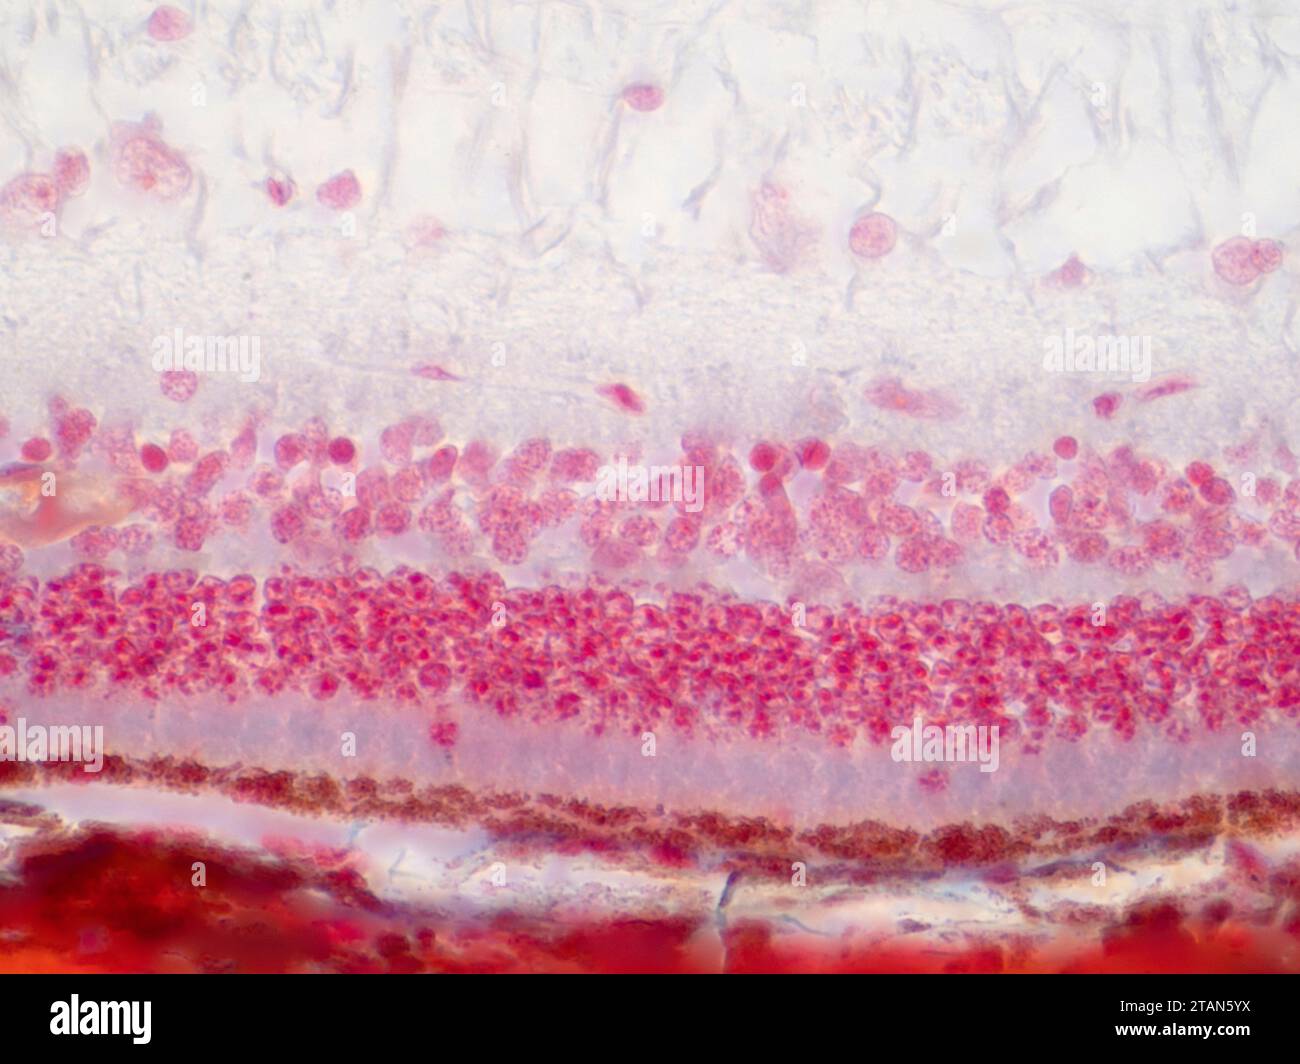 Human retina tissue, light micrograph Stock Photo